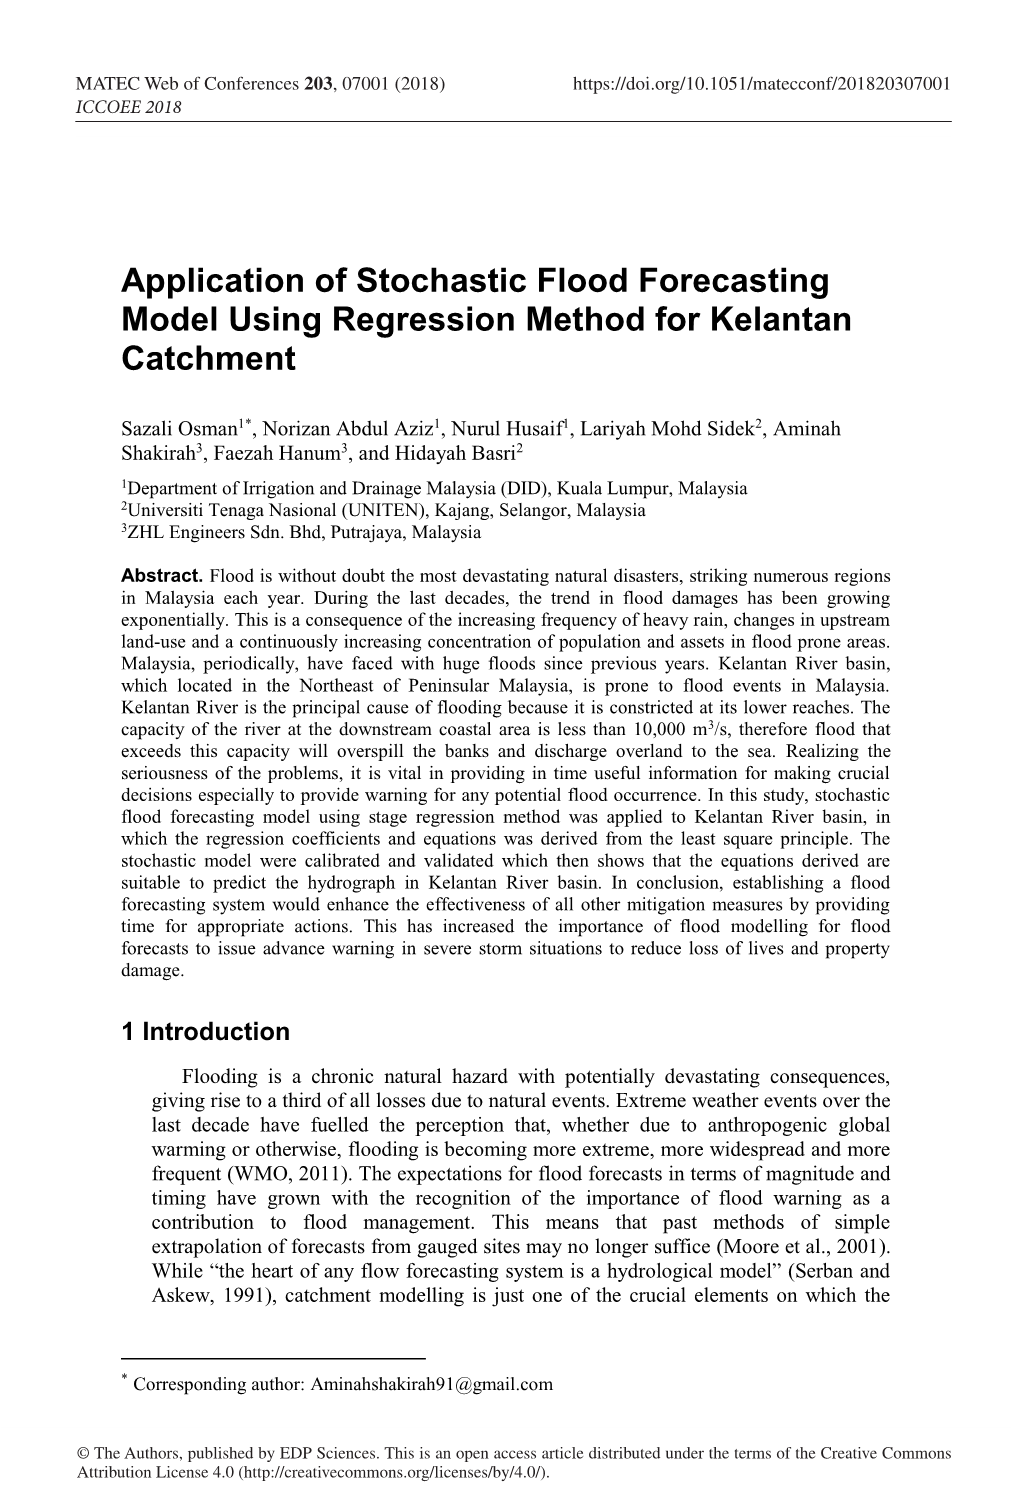 Application of Stochastic Flood Forecasting Model Using Regression Method for Kelantan Catchment